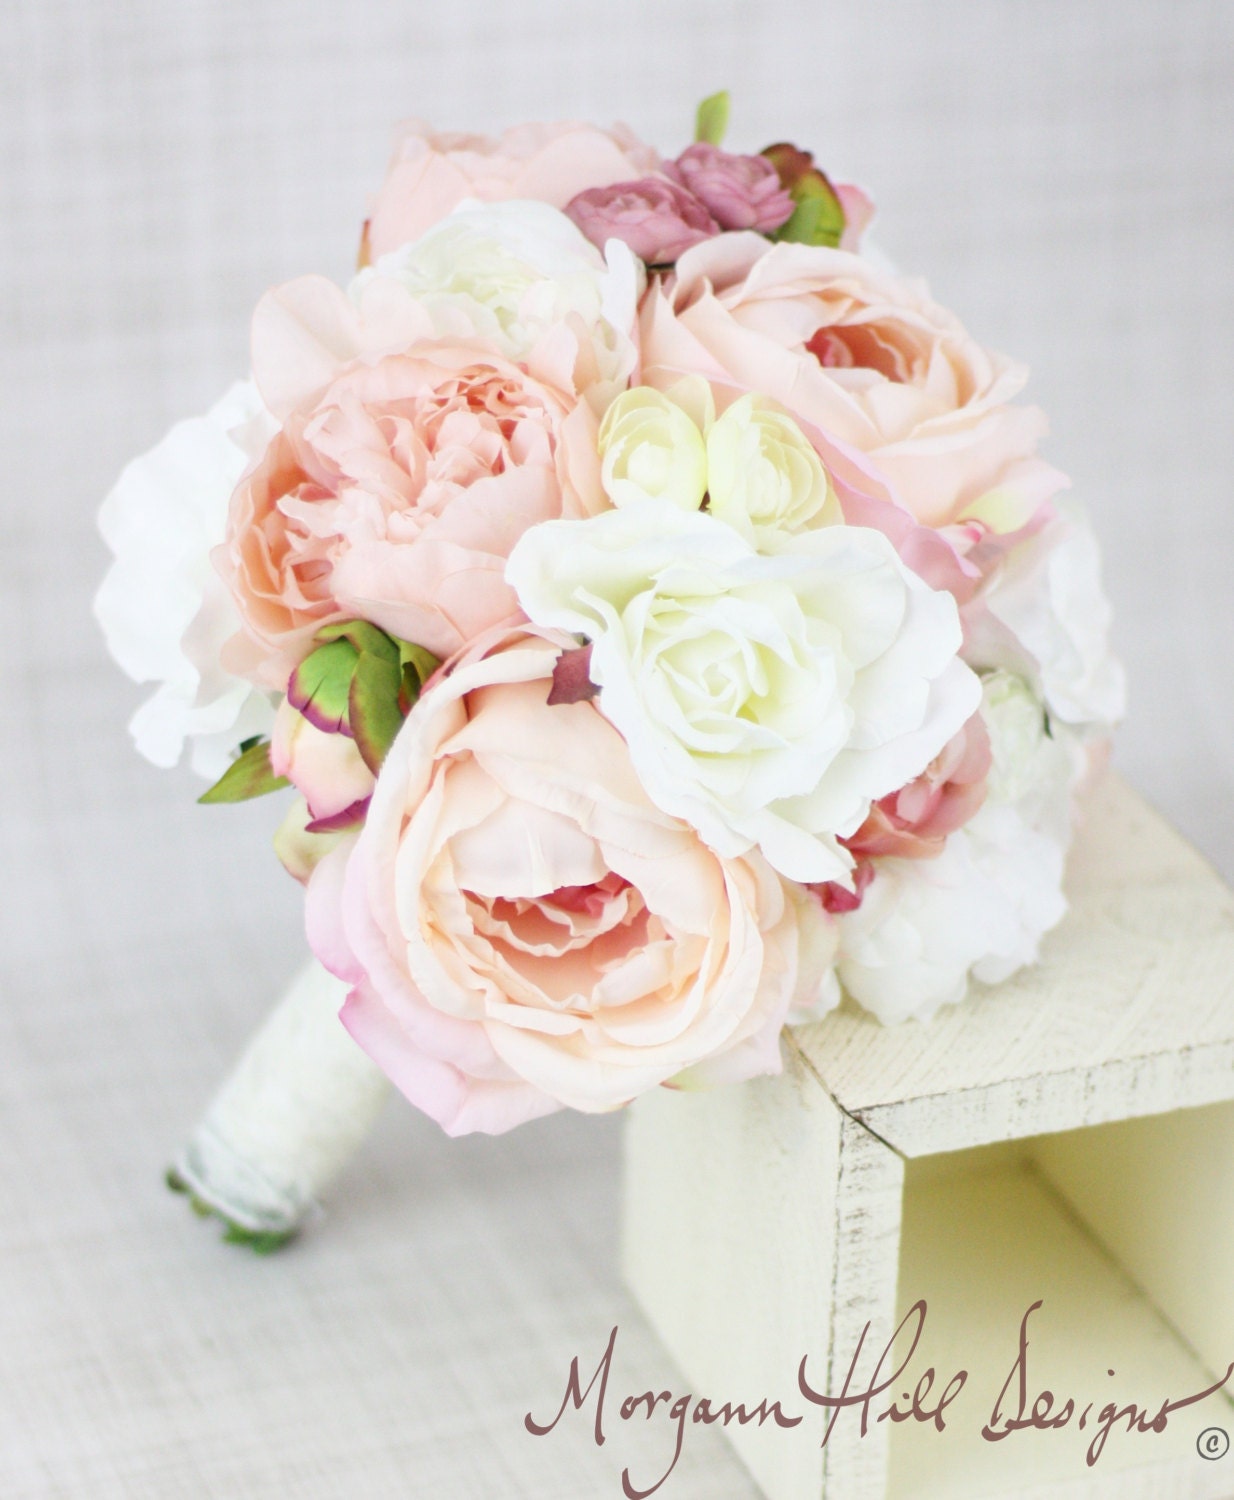 Silk Bride Bridesmaid Bouquet Peony Peonies Roses Ranunculus Daisies Country Wedding Lace (Item Number 130118) - braggingbags